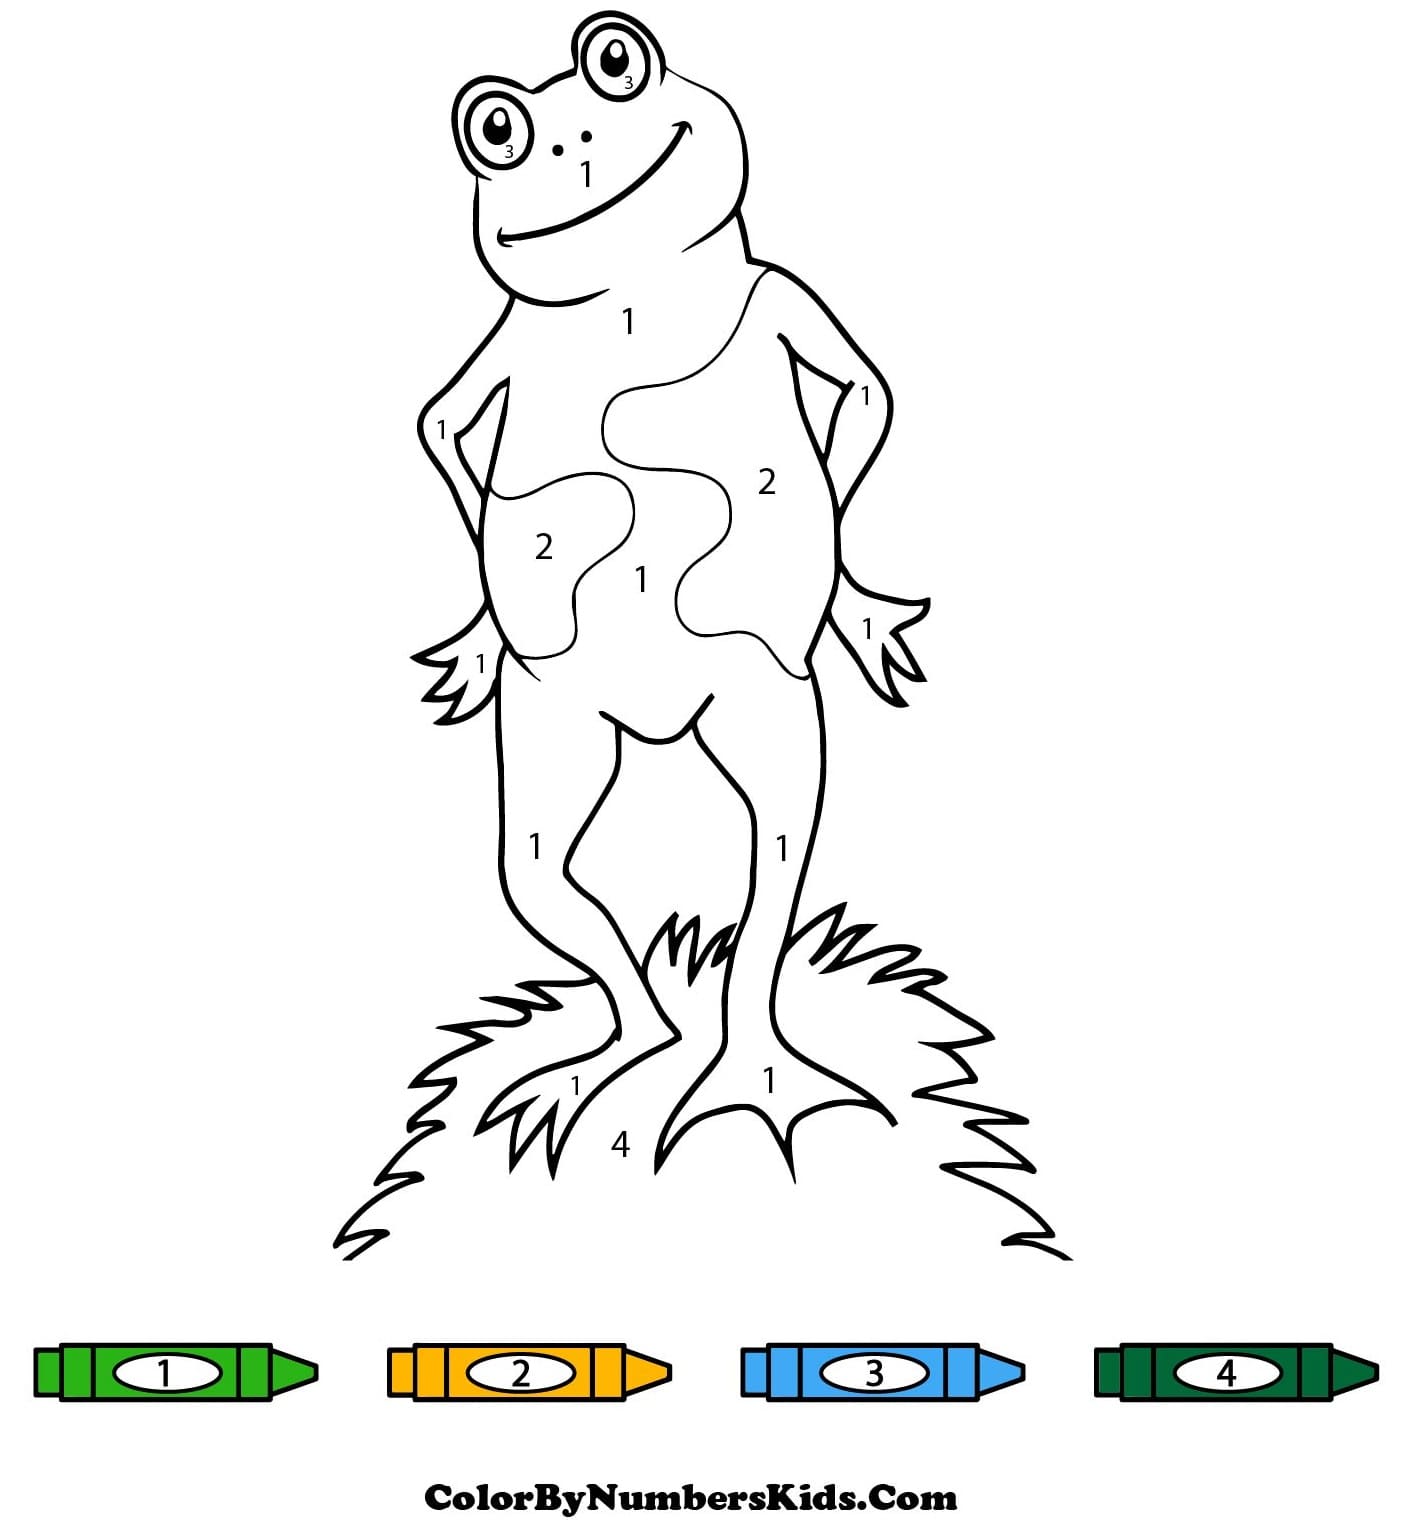 Frog Color By Number Sheet